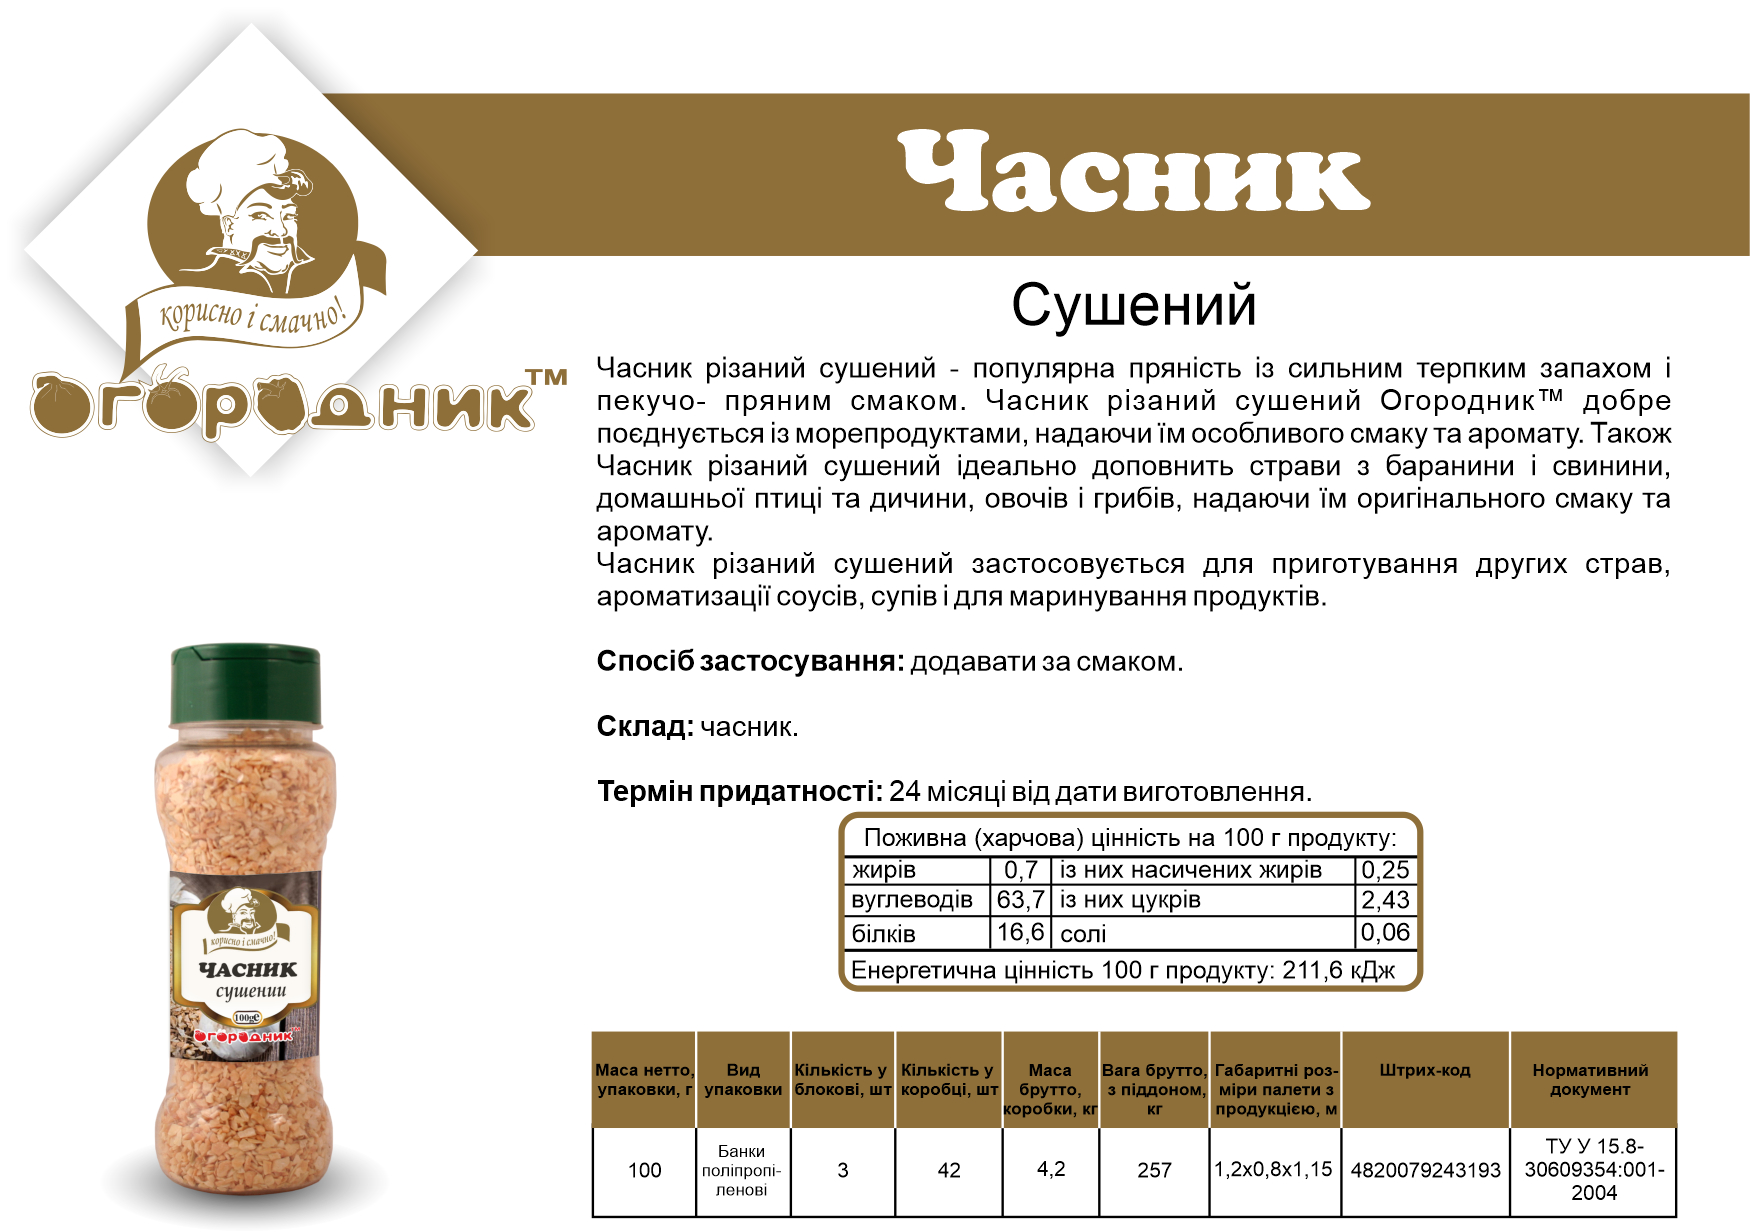 Chasnyk-100 g